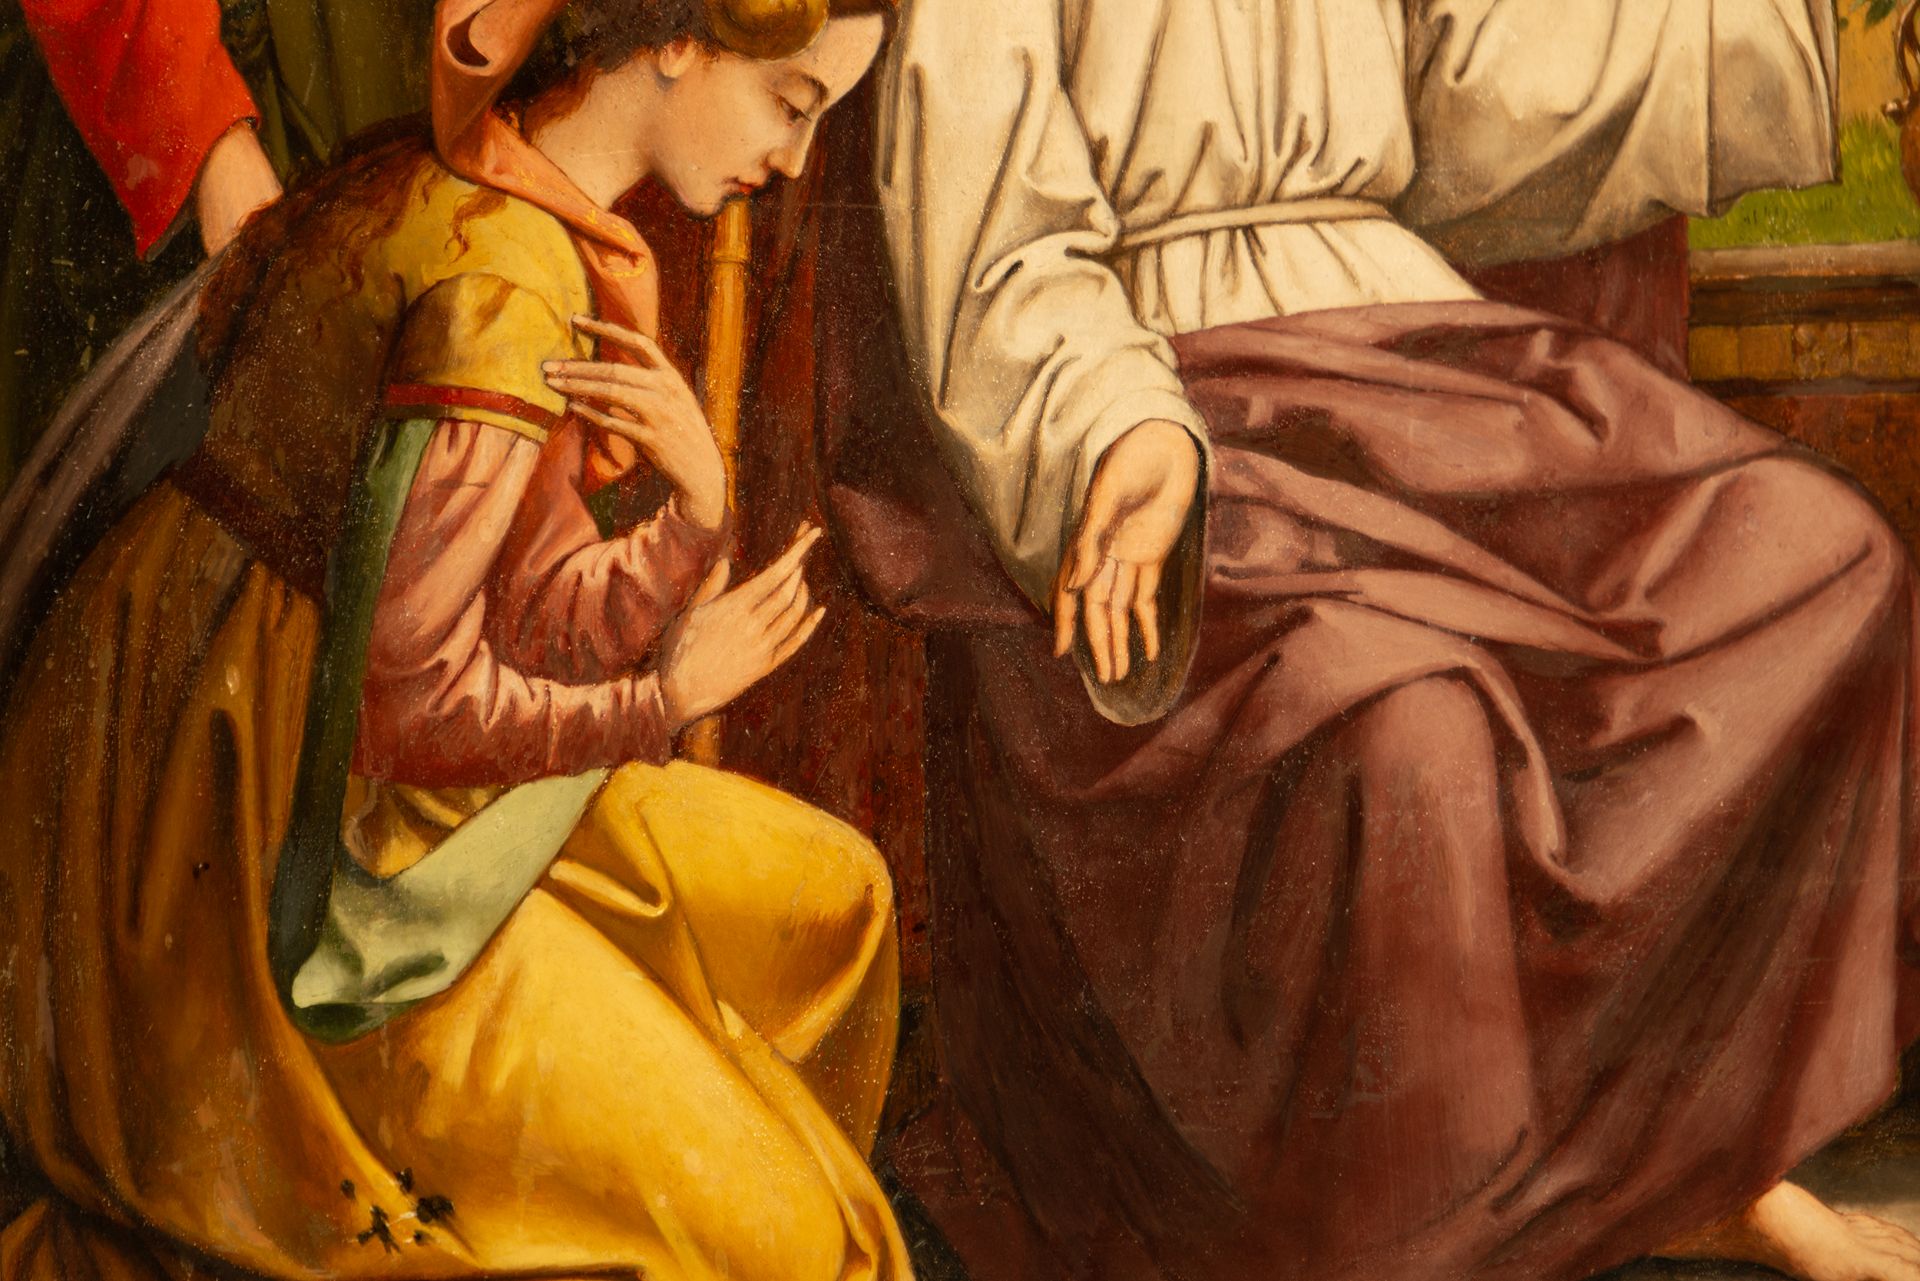 Christ and the Samaritan, 19th century Italian school - Image 6 of 8